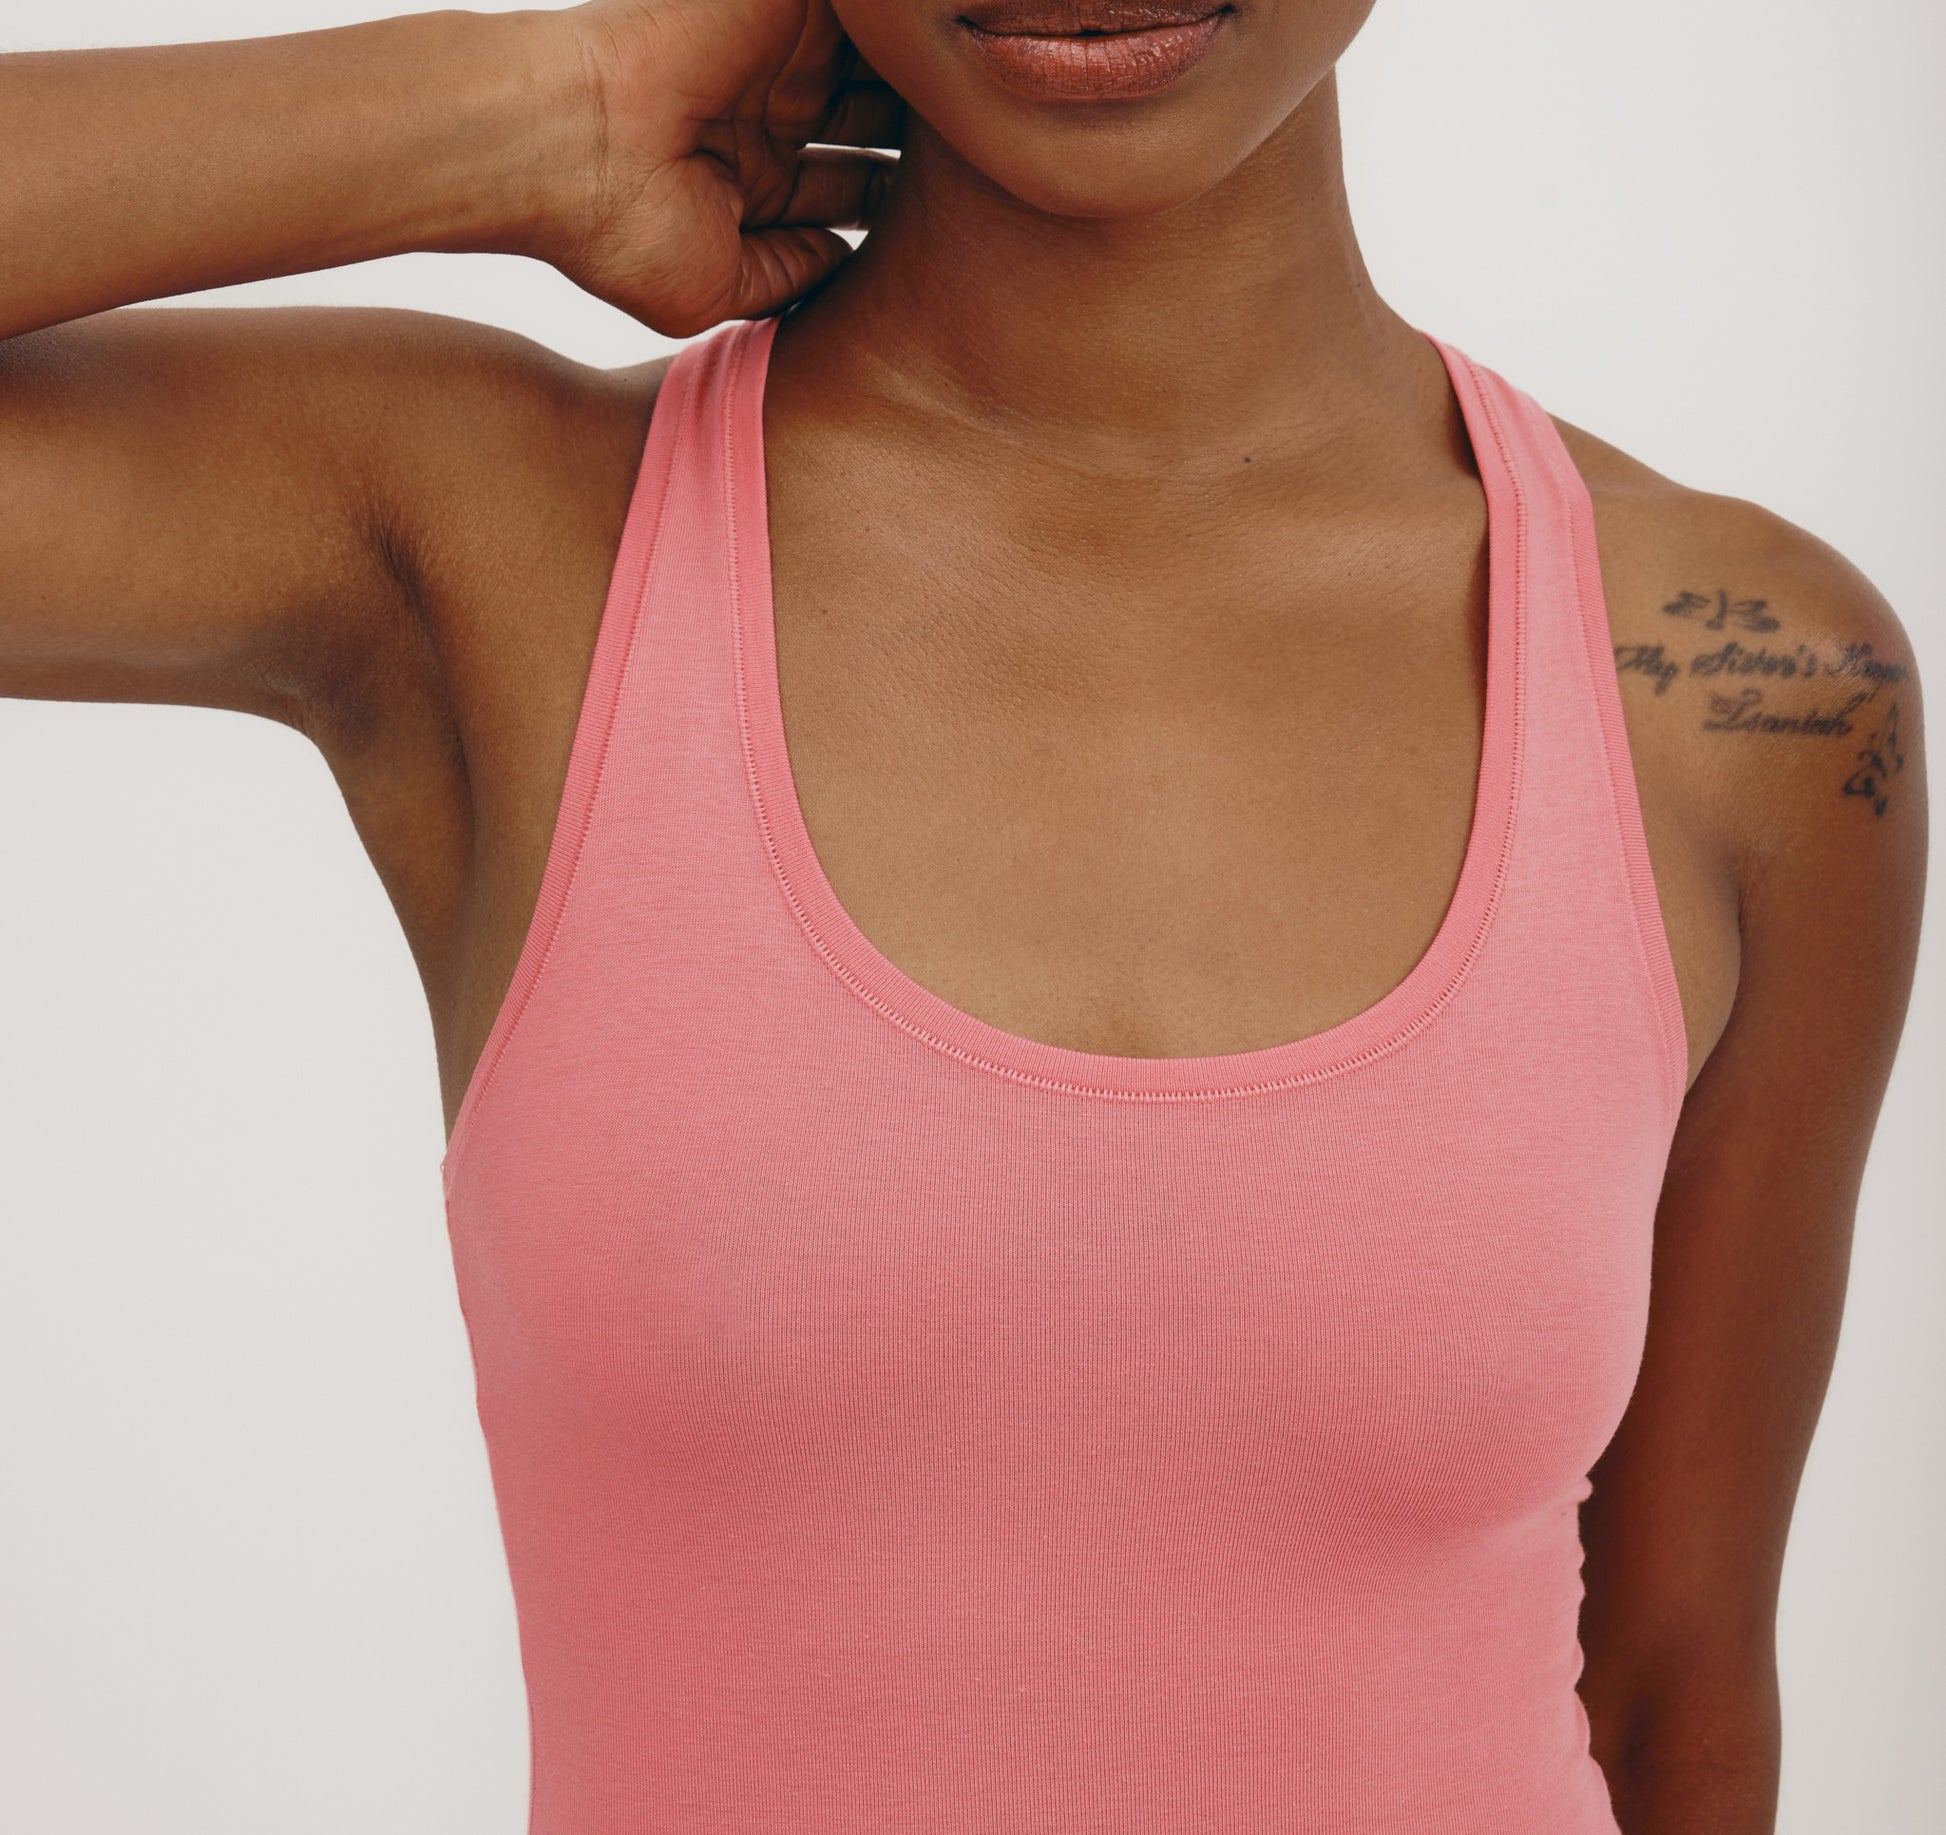  Bodysuits For Women Basic Sleeveless Stretchy